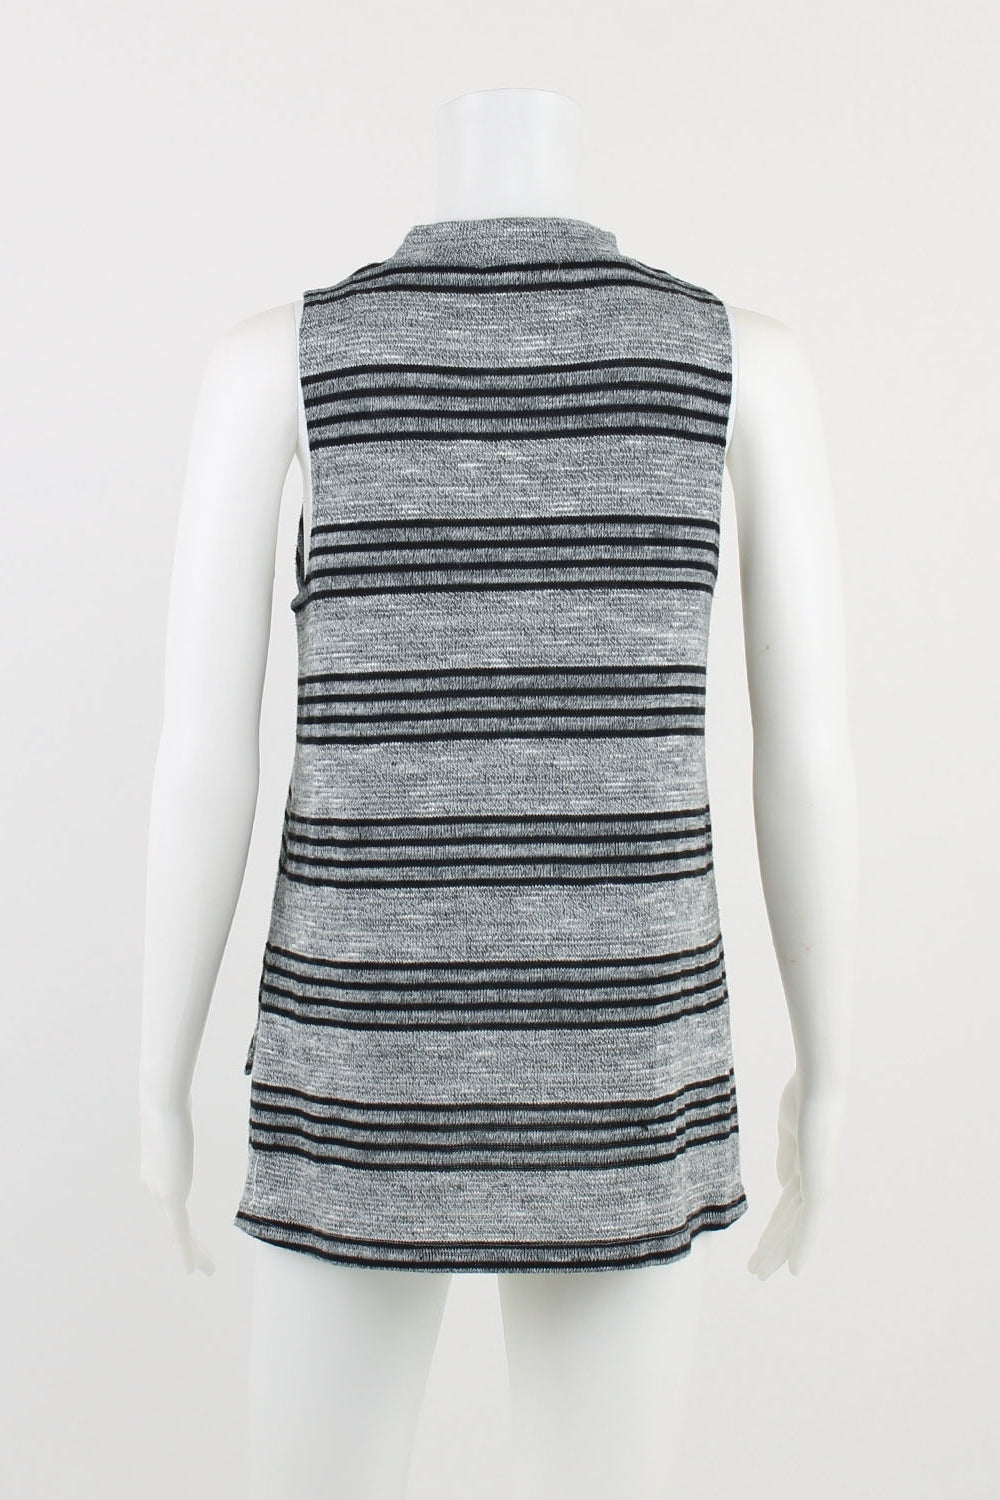 SASS Grey Striped Knit Top 6